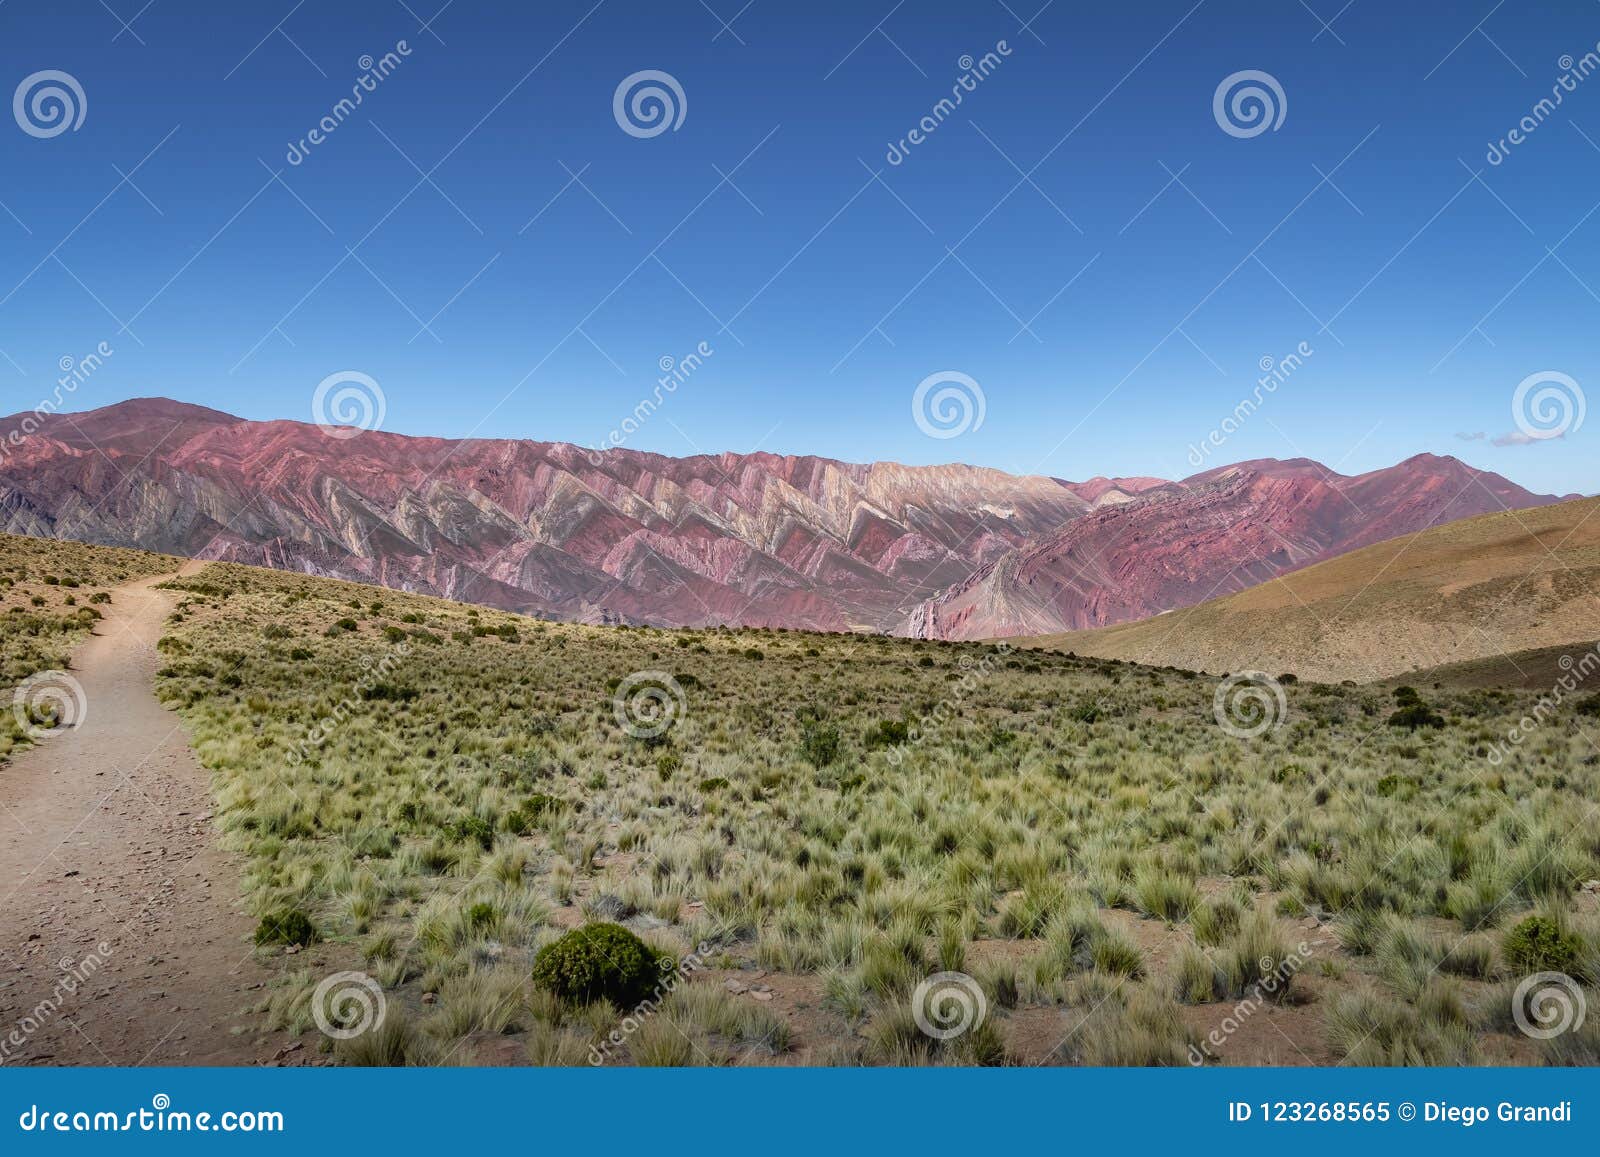 serrania de hornocal, the fourteen colors hill at quebrada de humahuaca - humahuaca, jujuy, argentina